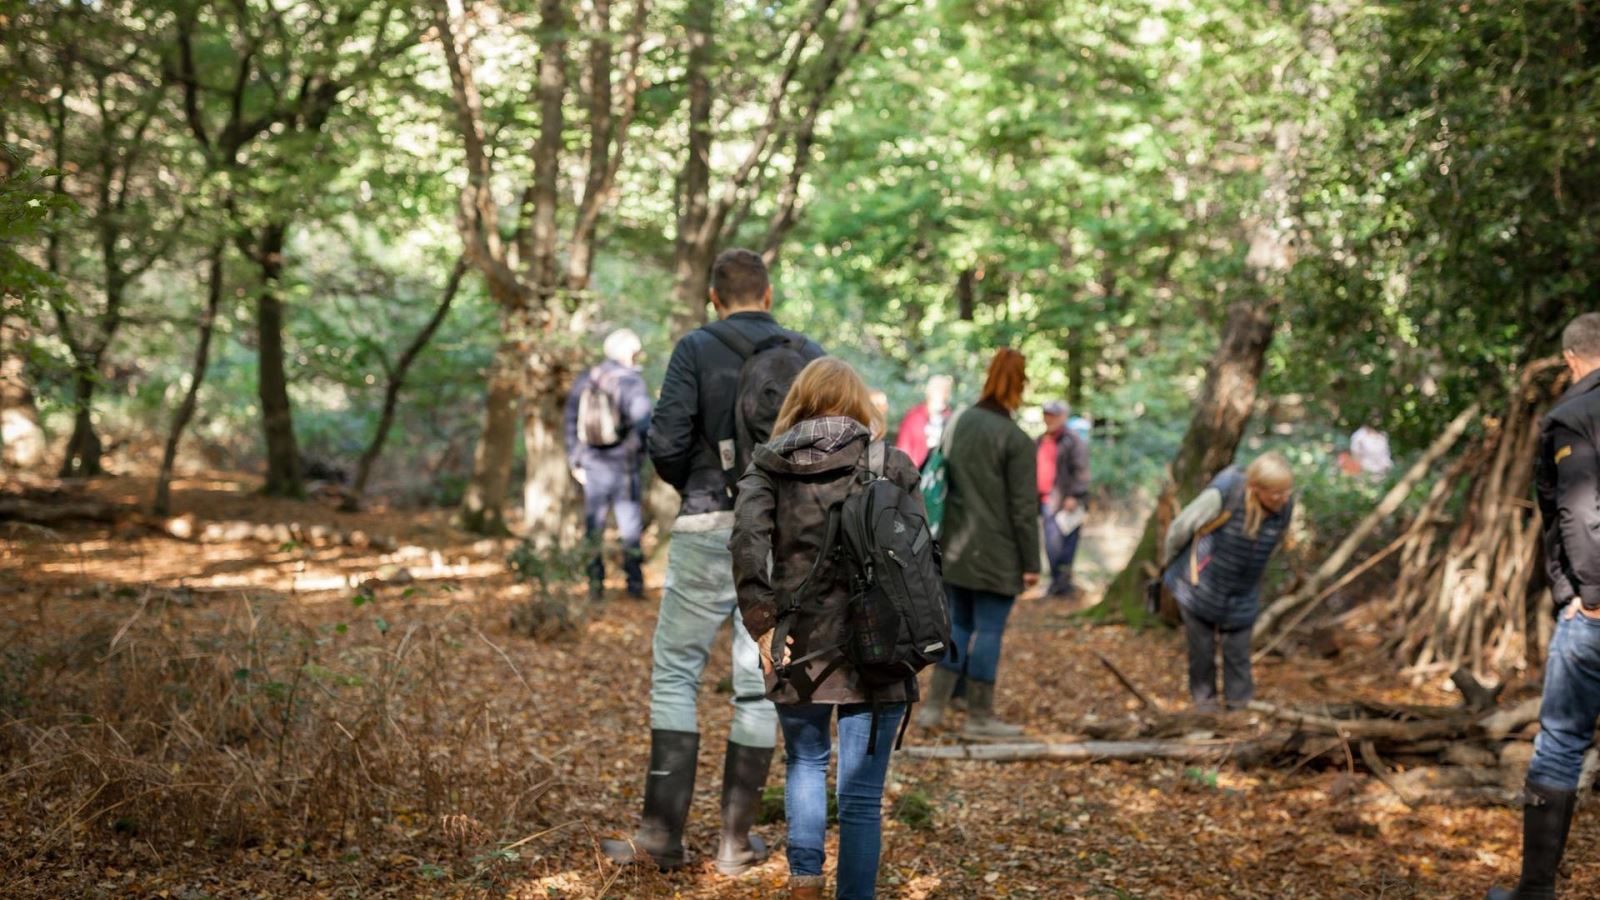 Group of people walking through woodlands